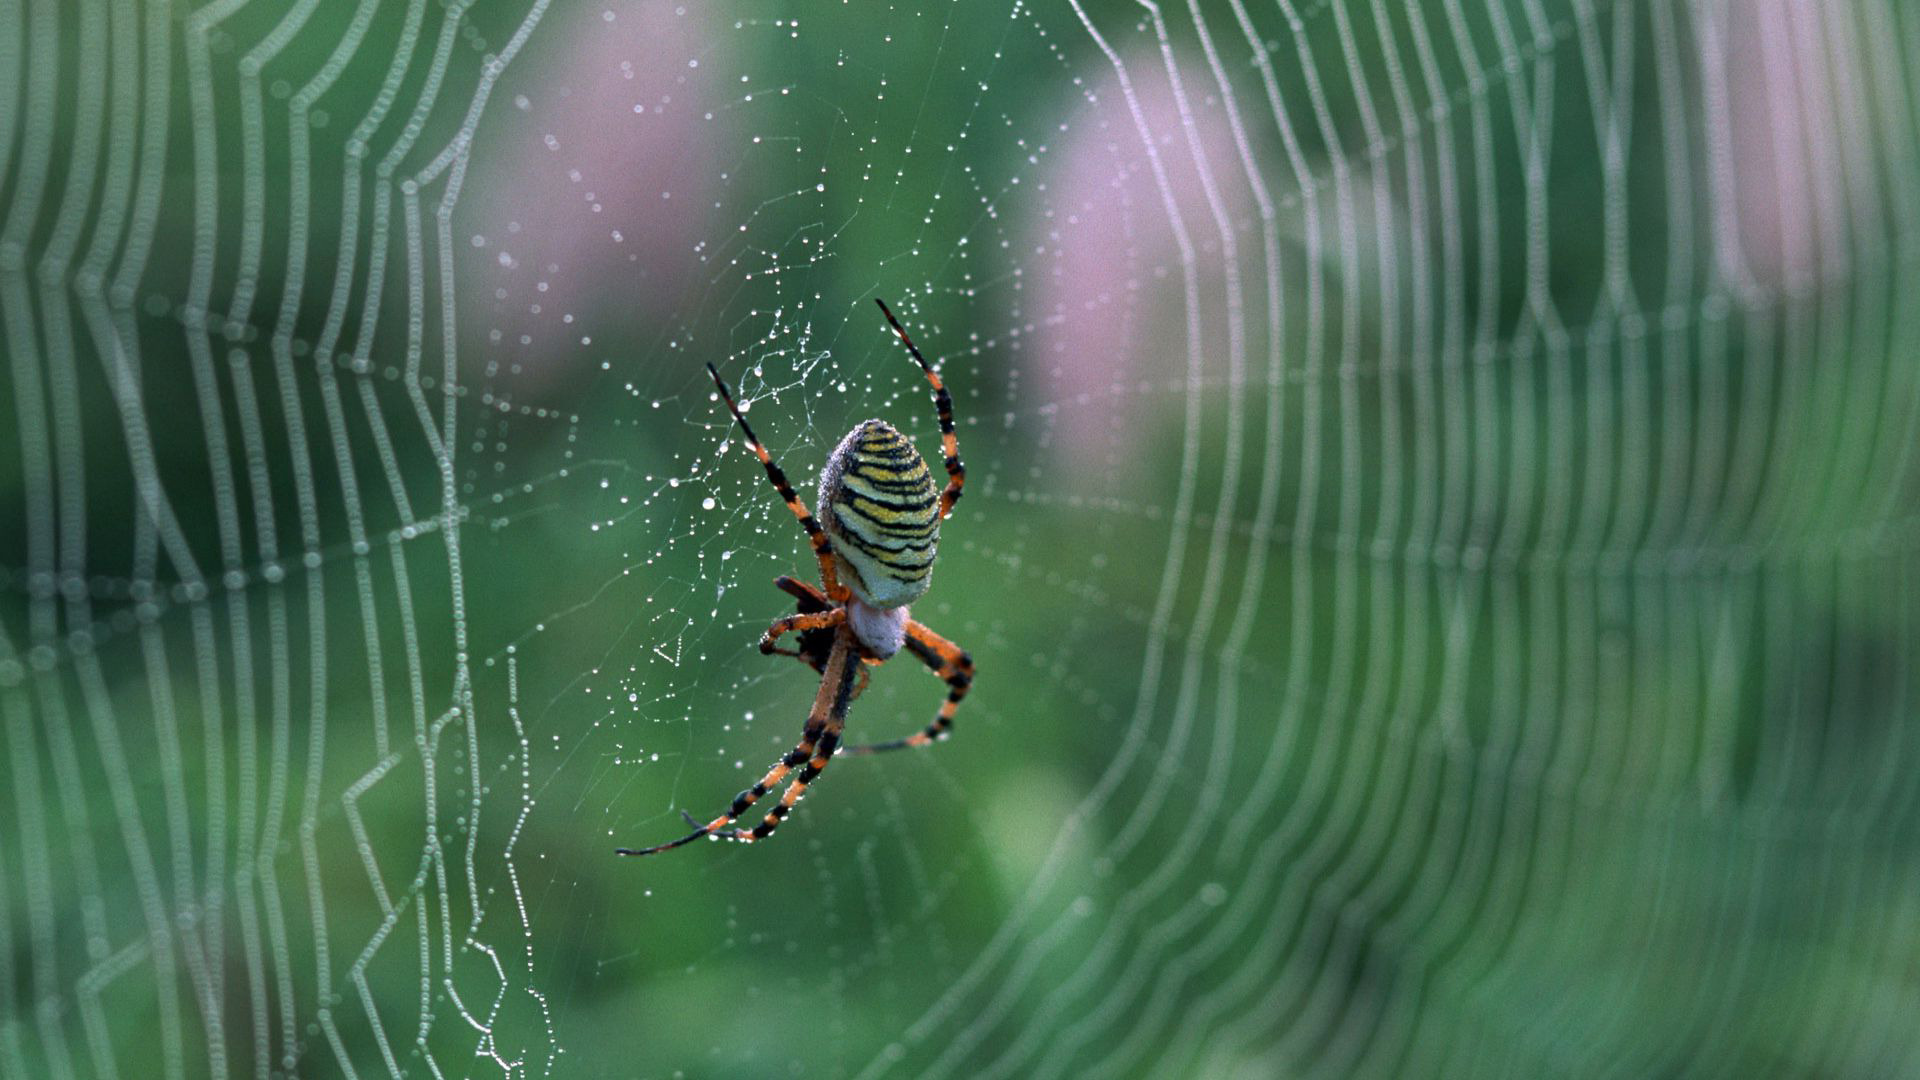 Spider Animal HD Wallpaper